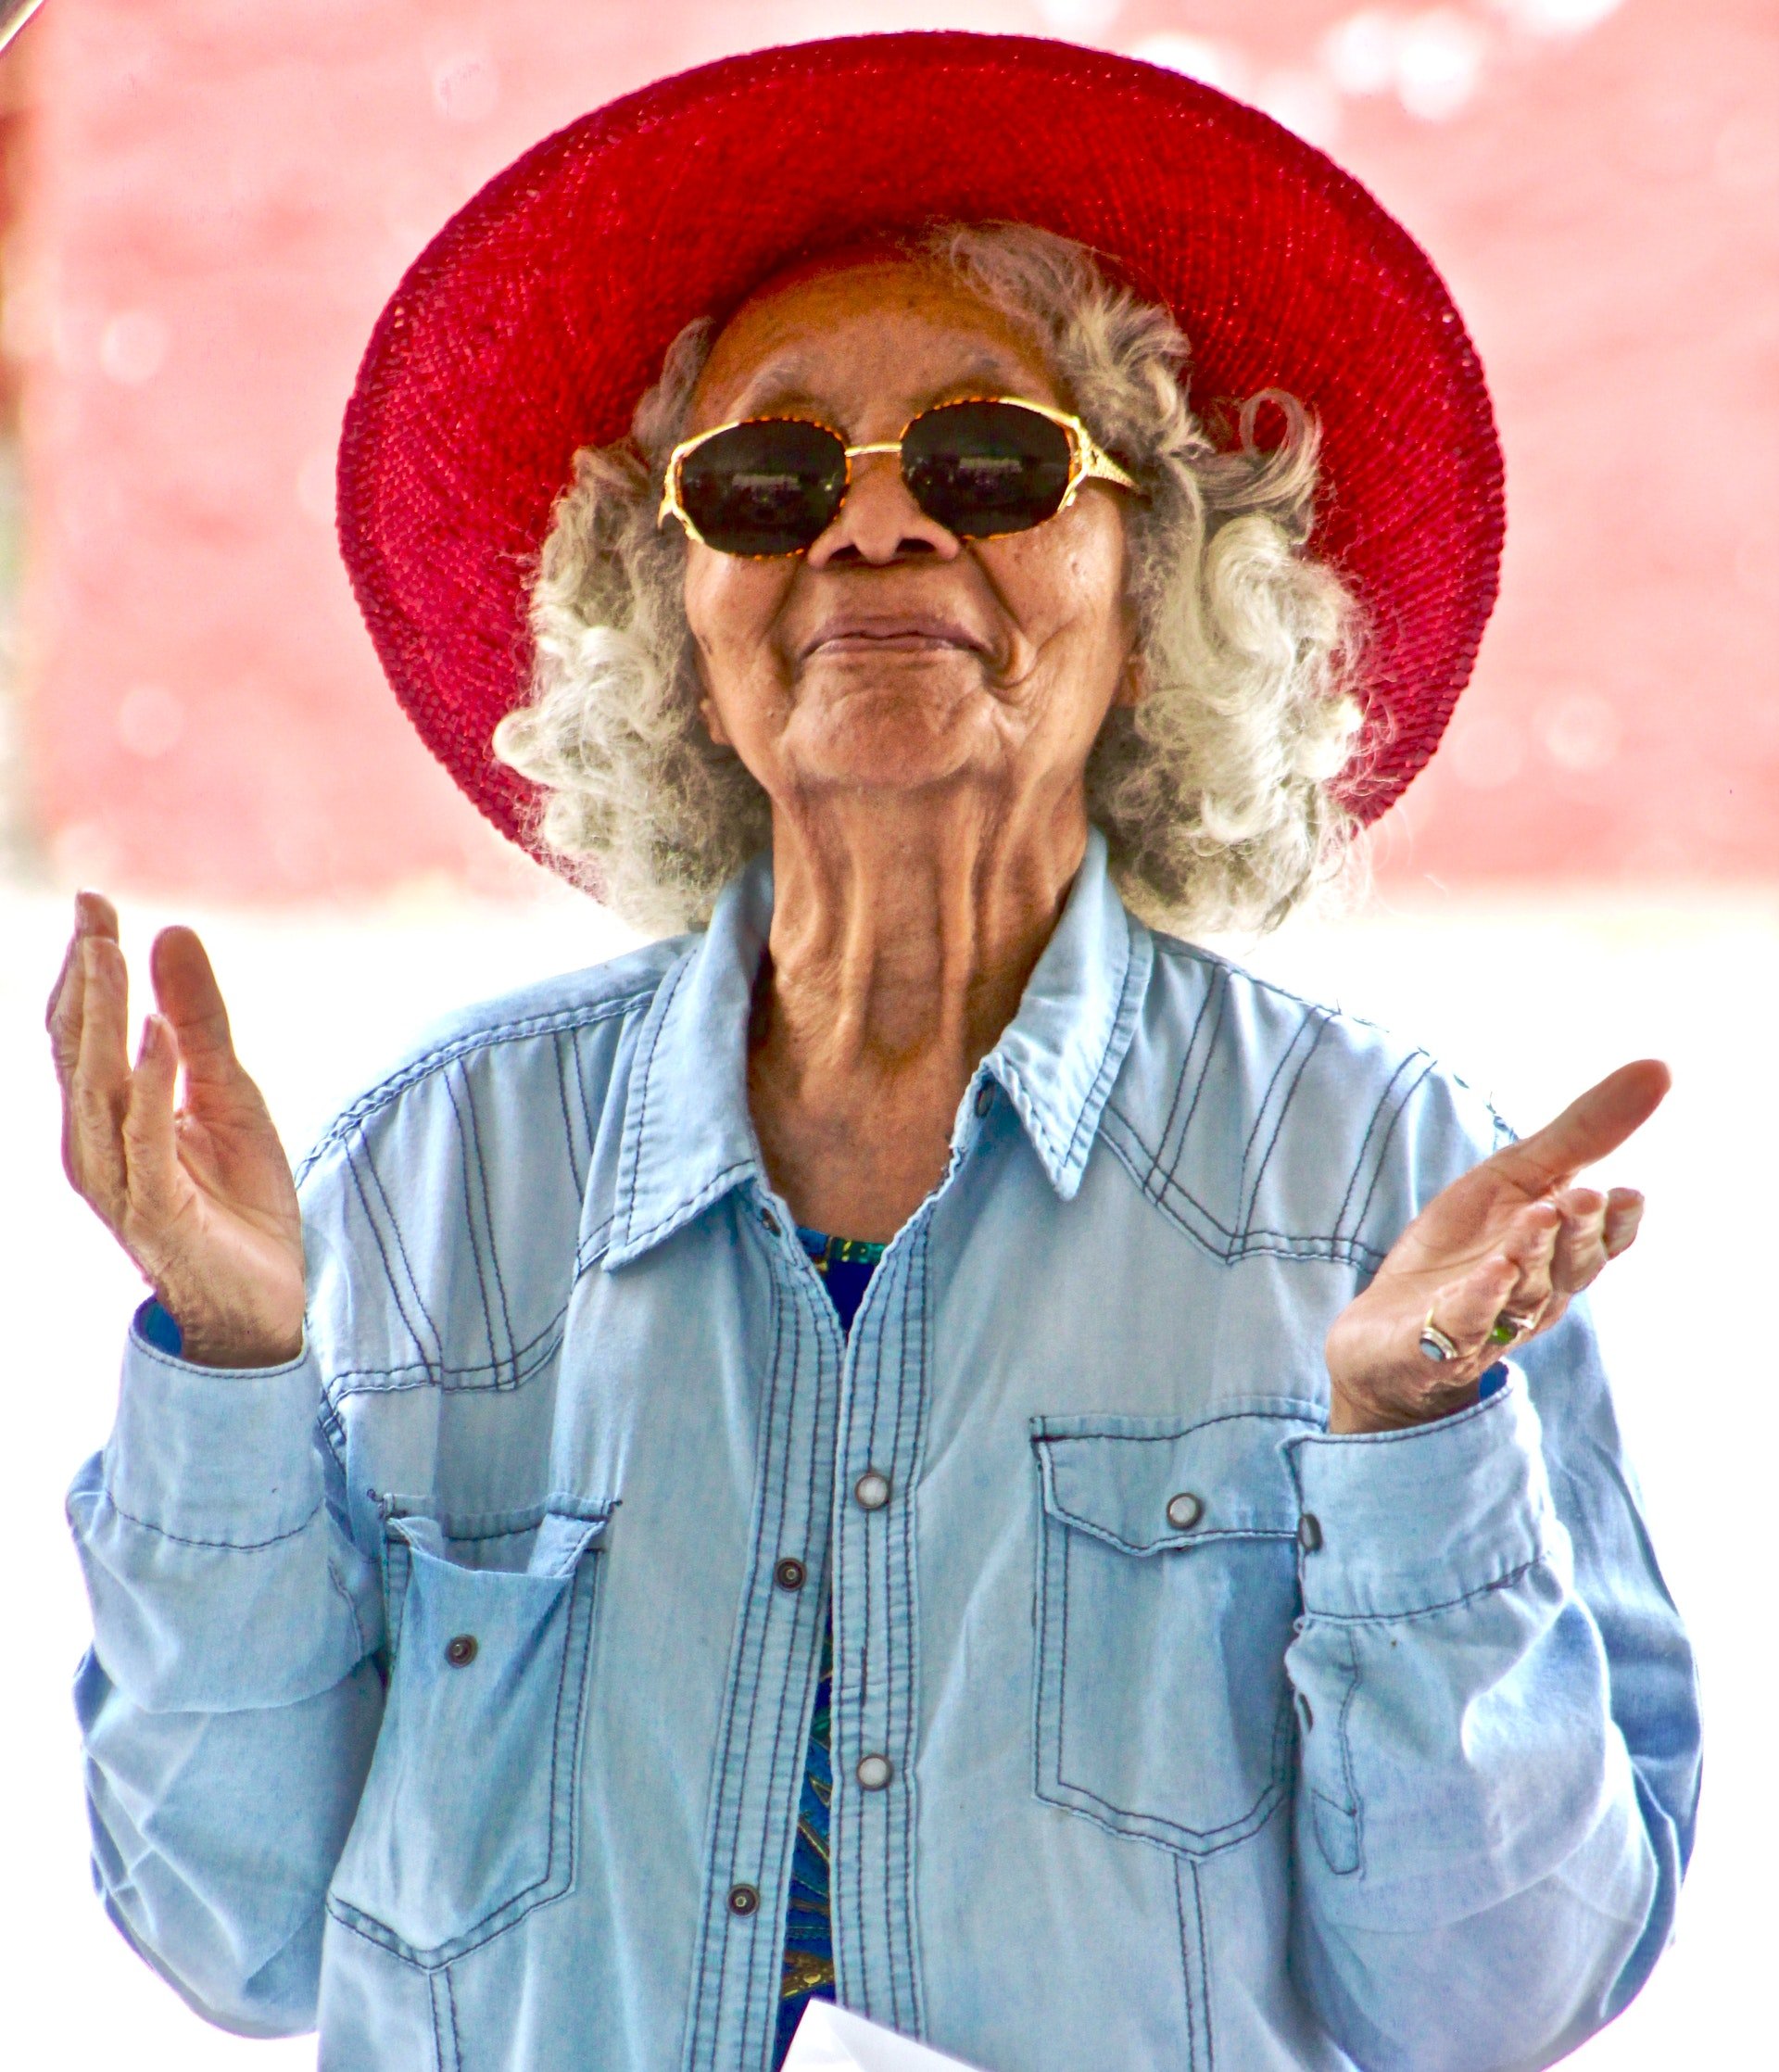 Photo of an elderly woman | Photo: Pexels